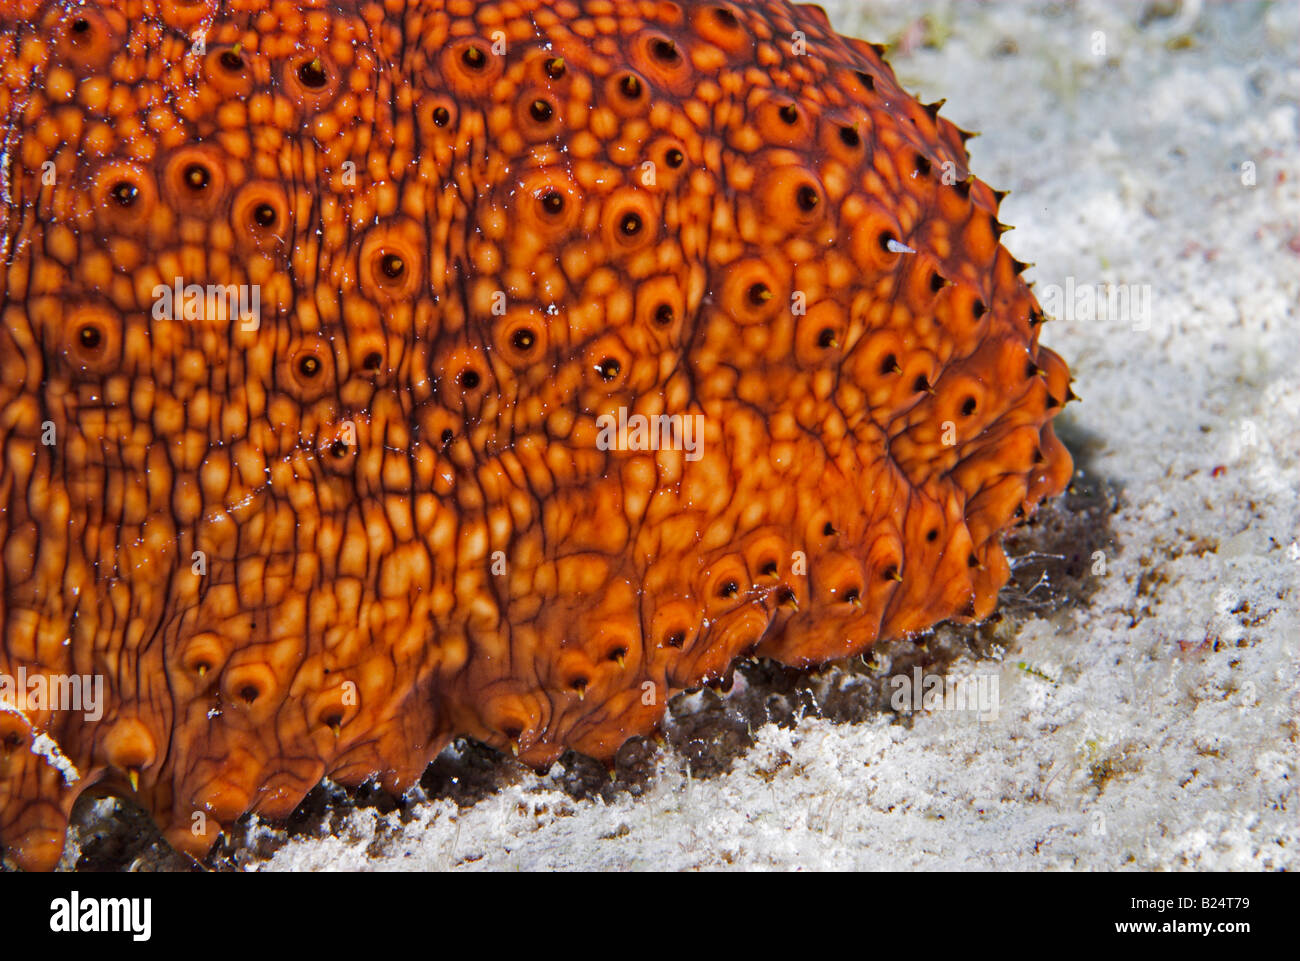 Closeup 'Sea cucumber' Actinopyga agassizii on sandy substrate Bahamas Stock Photo